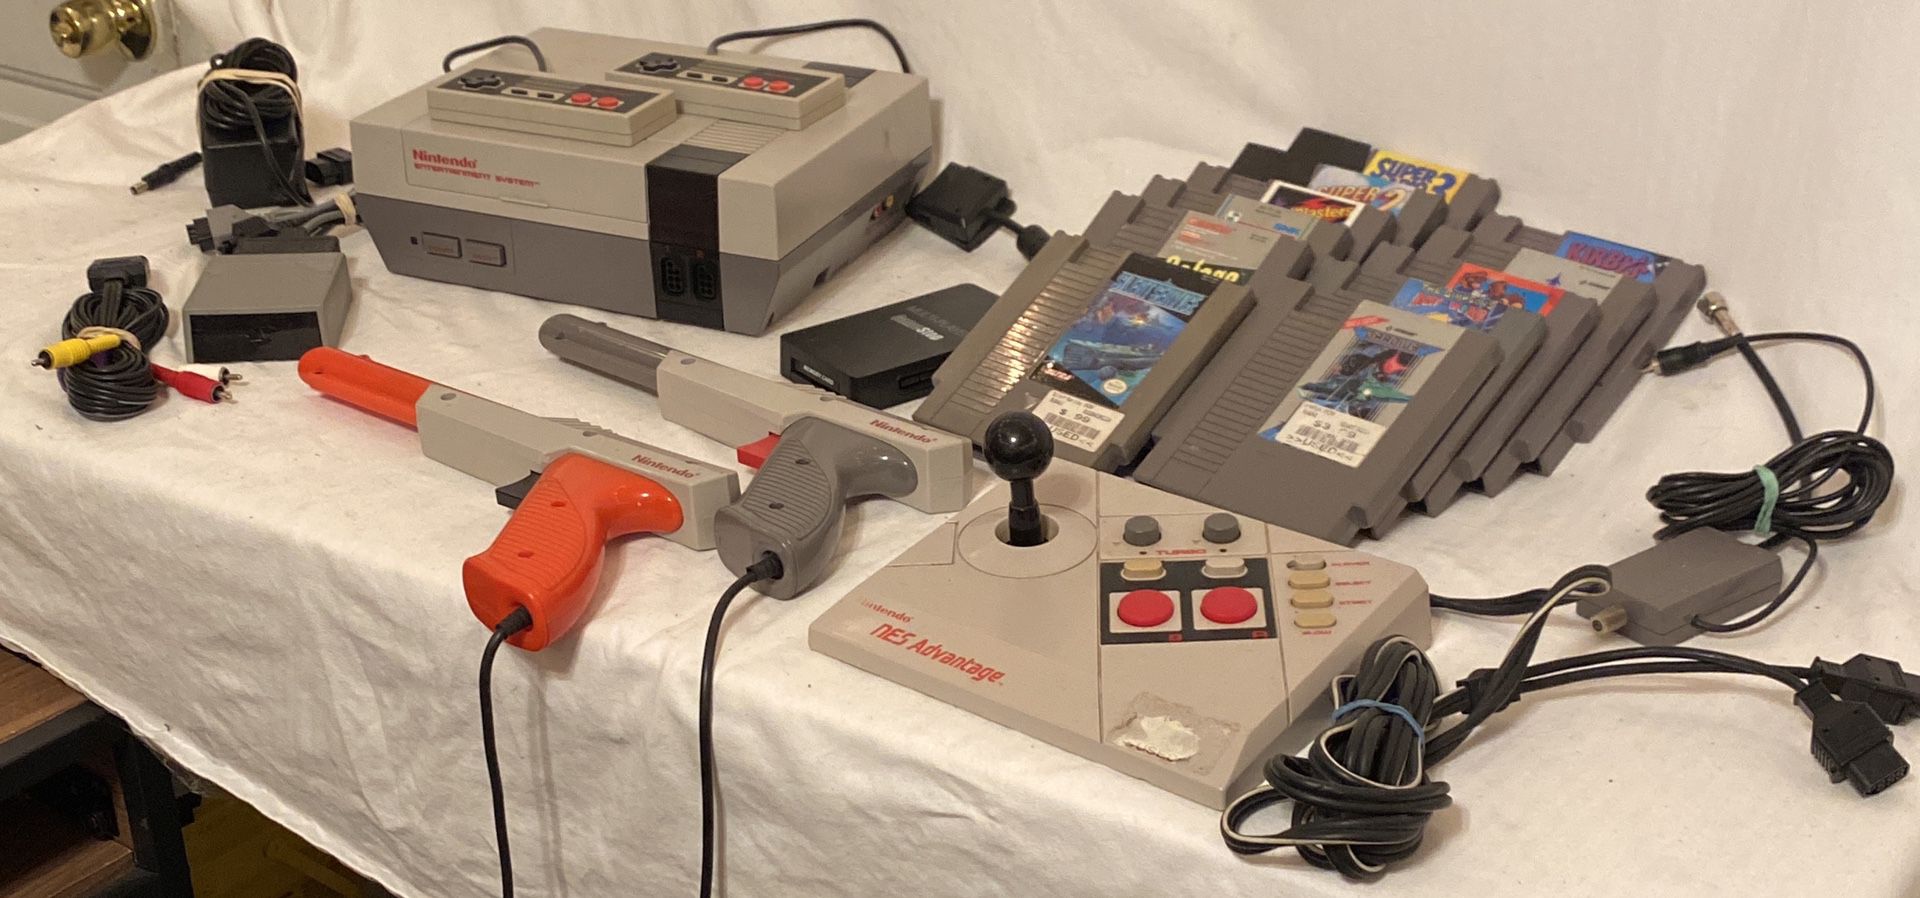 Original NES,11 games,2 controllers, 2 guns,NESAdvantage, Multiplayer/necessary cords!